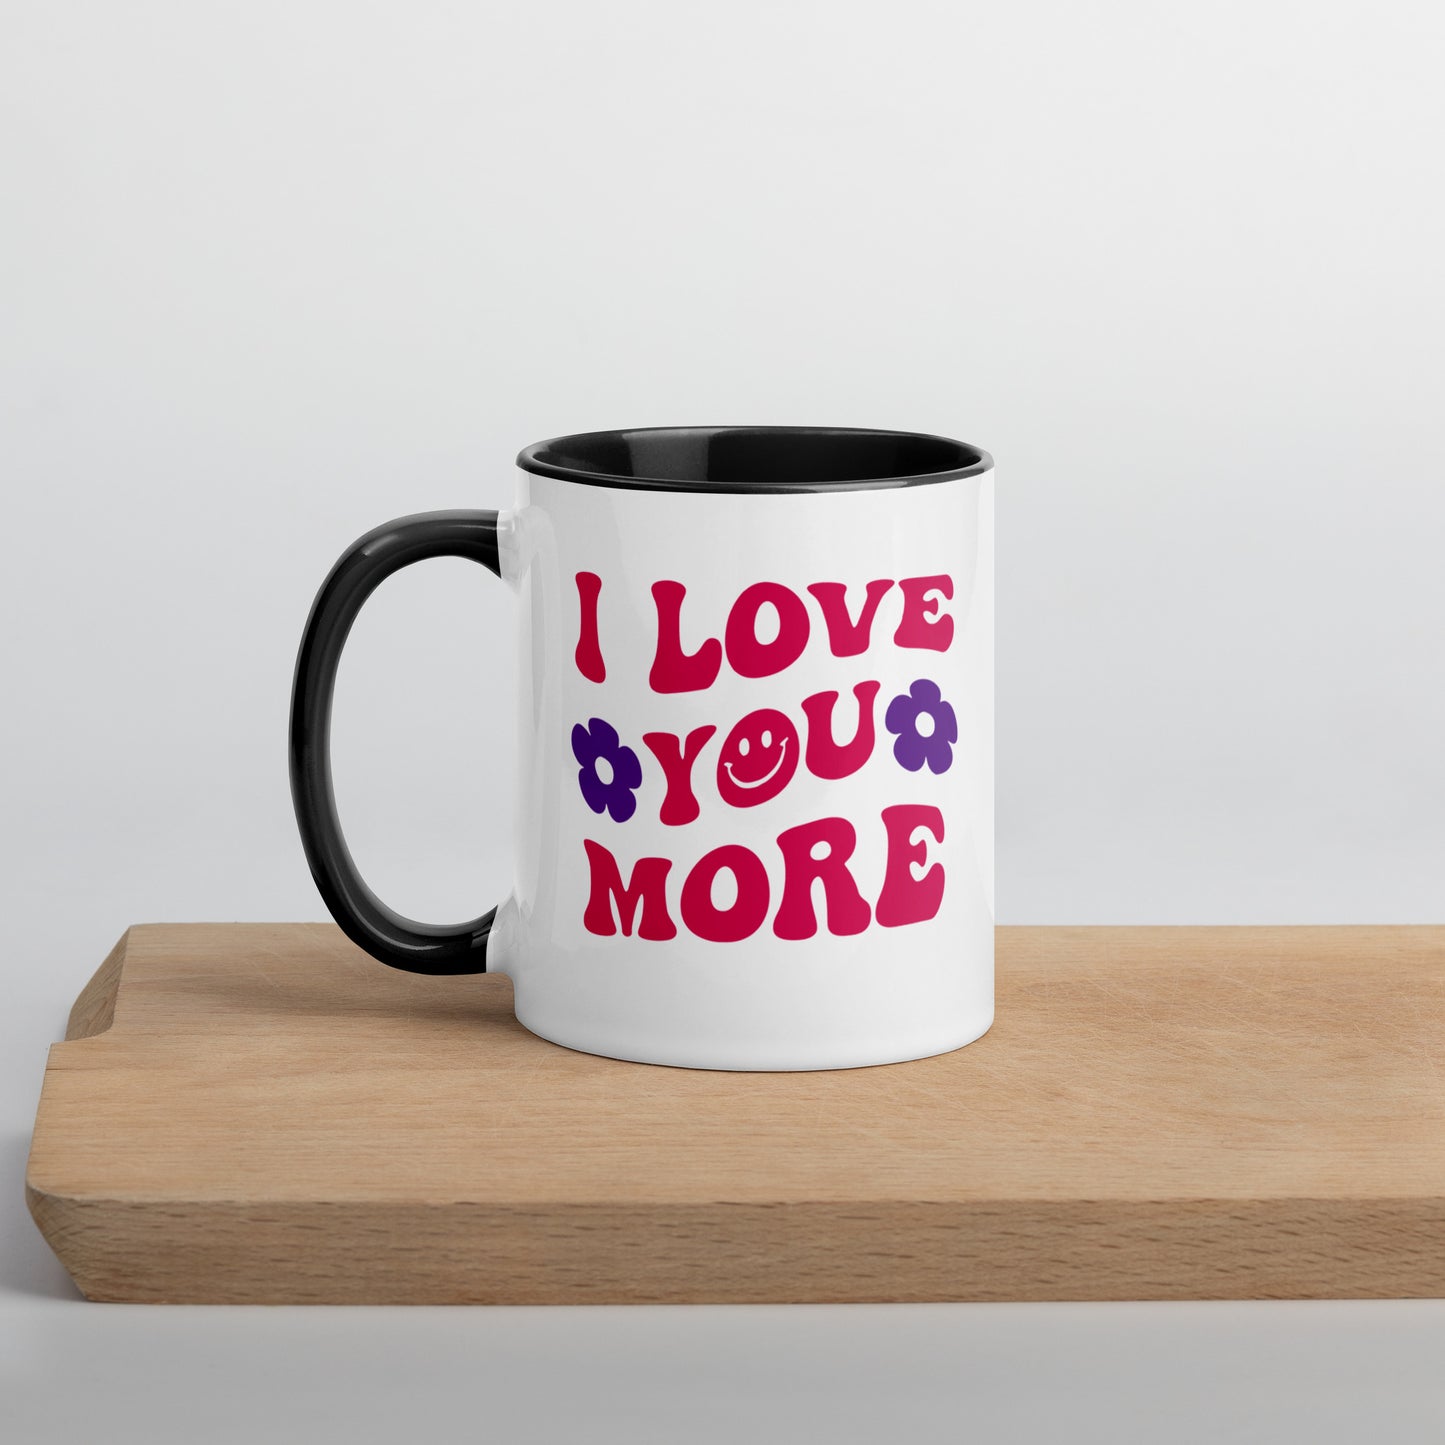 I Love You More Mug with Color Inside